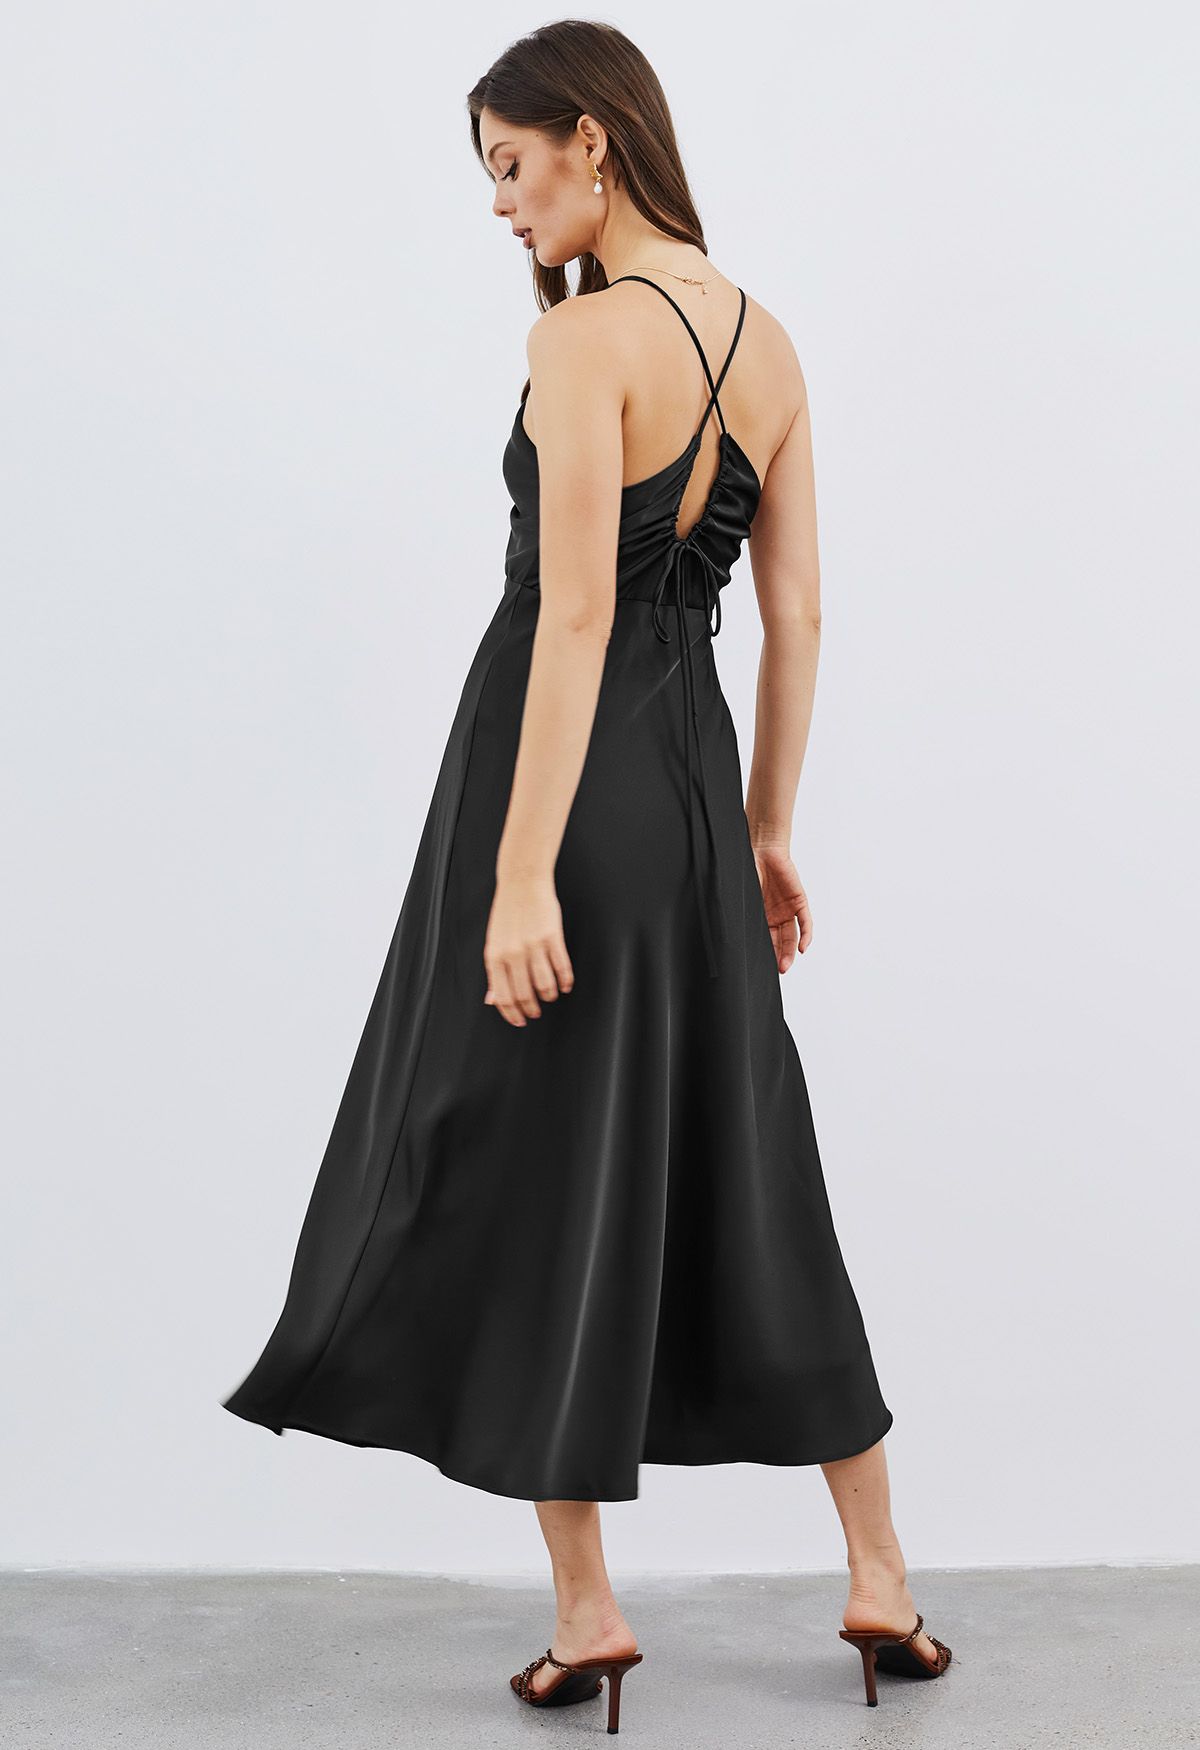 Crisscross Lace-Up Back Satin Dress in Black